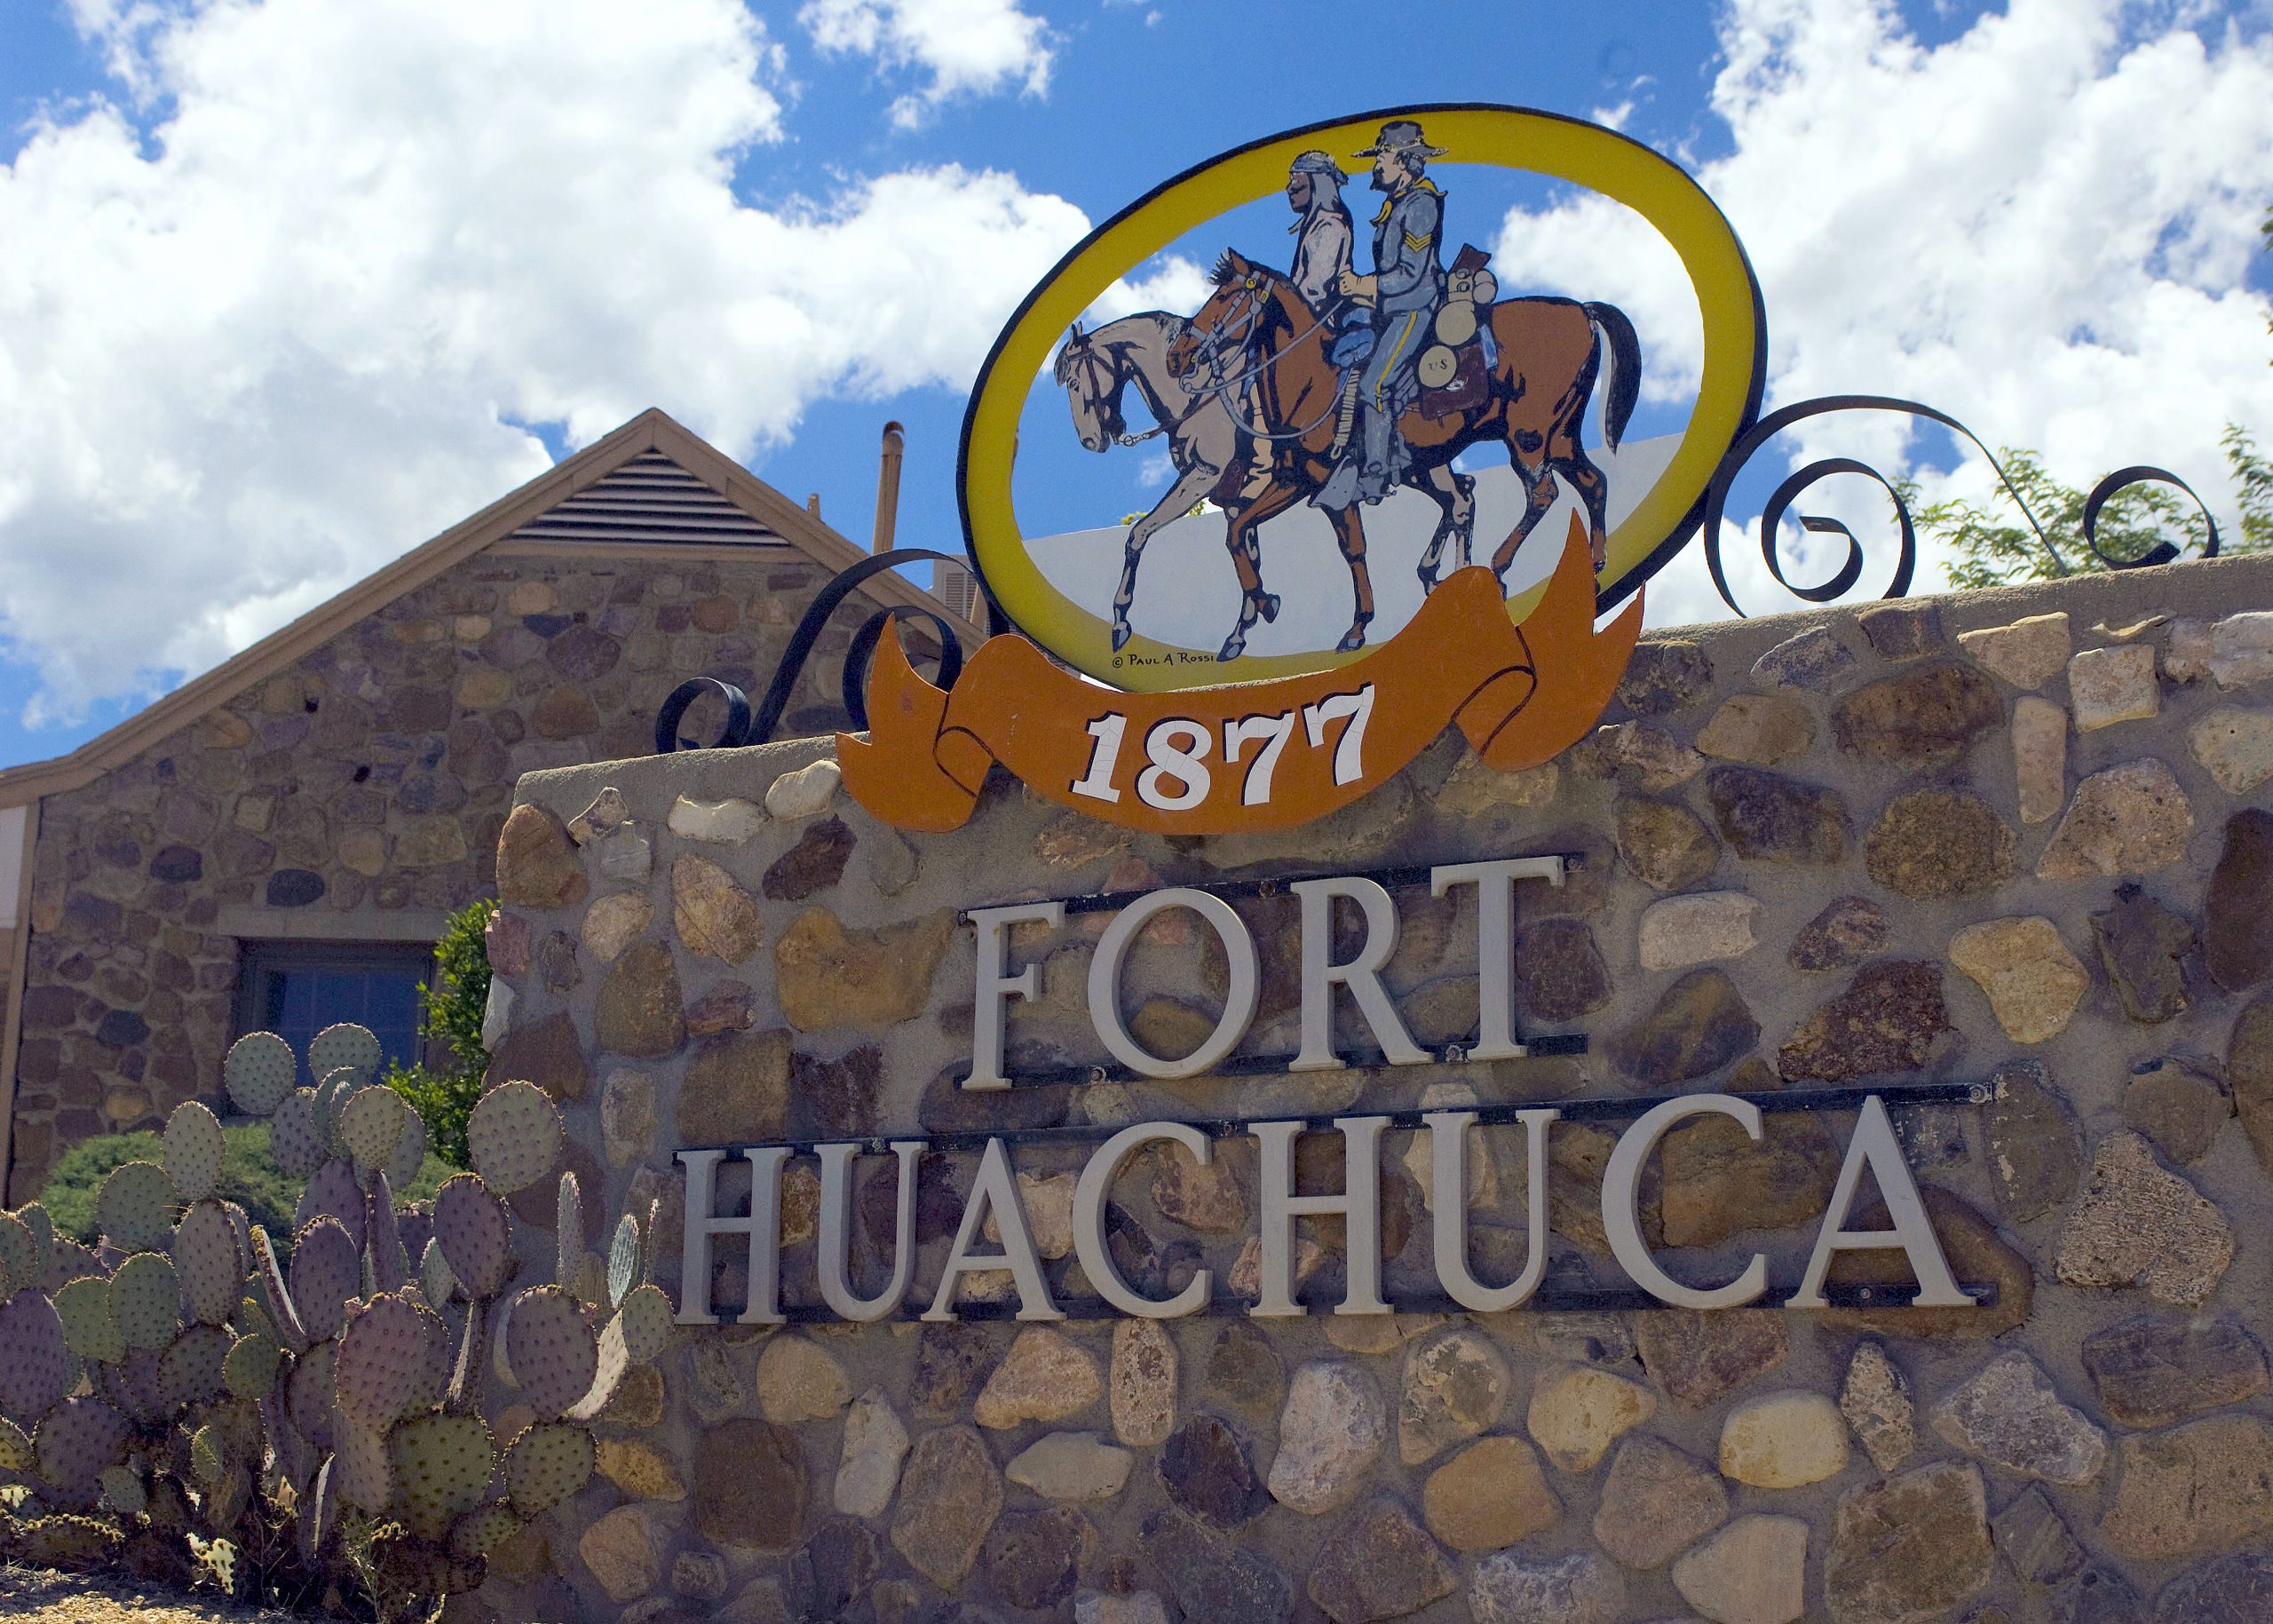 Fort Huachuca - Wikimedia Commons